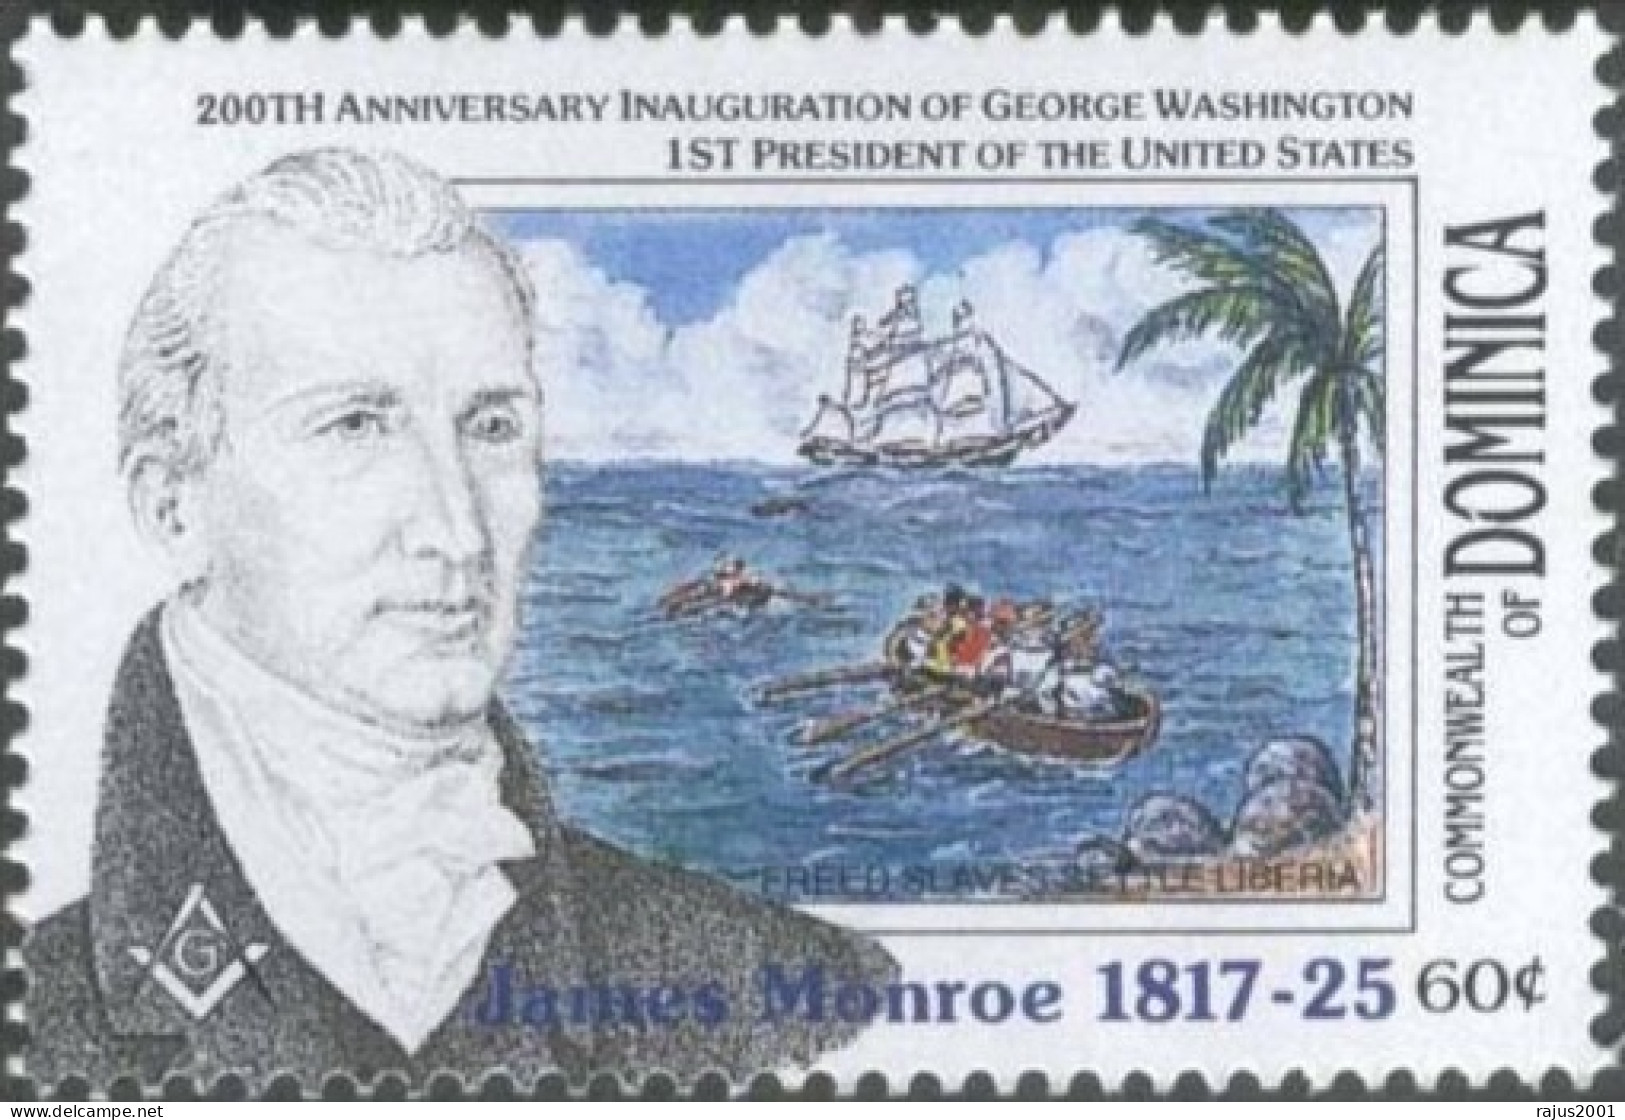 James Monroe, 5th American President, Williamsburg Lodge, Freemasonry, Freed Slaves Settlement Liberia, MNH Dominica - Francmasonería